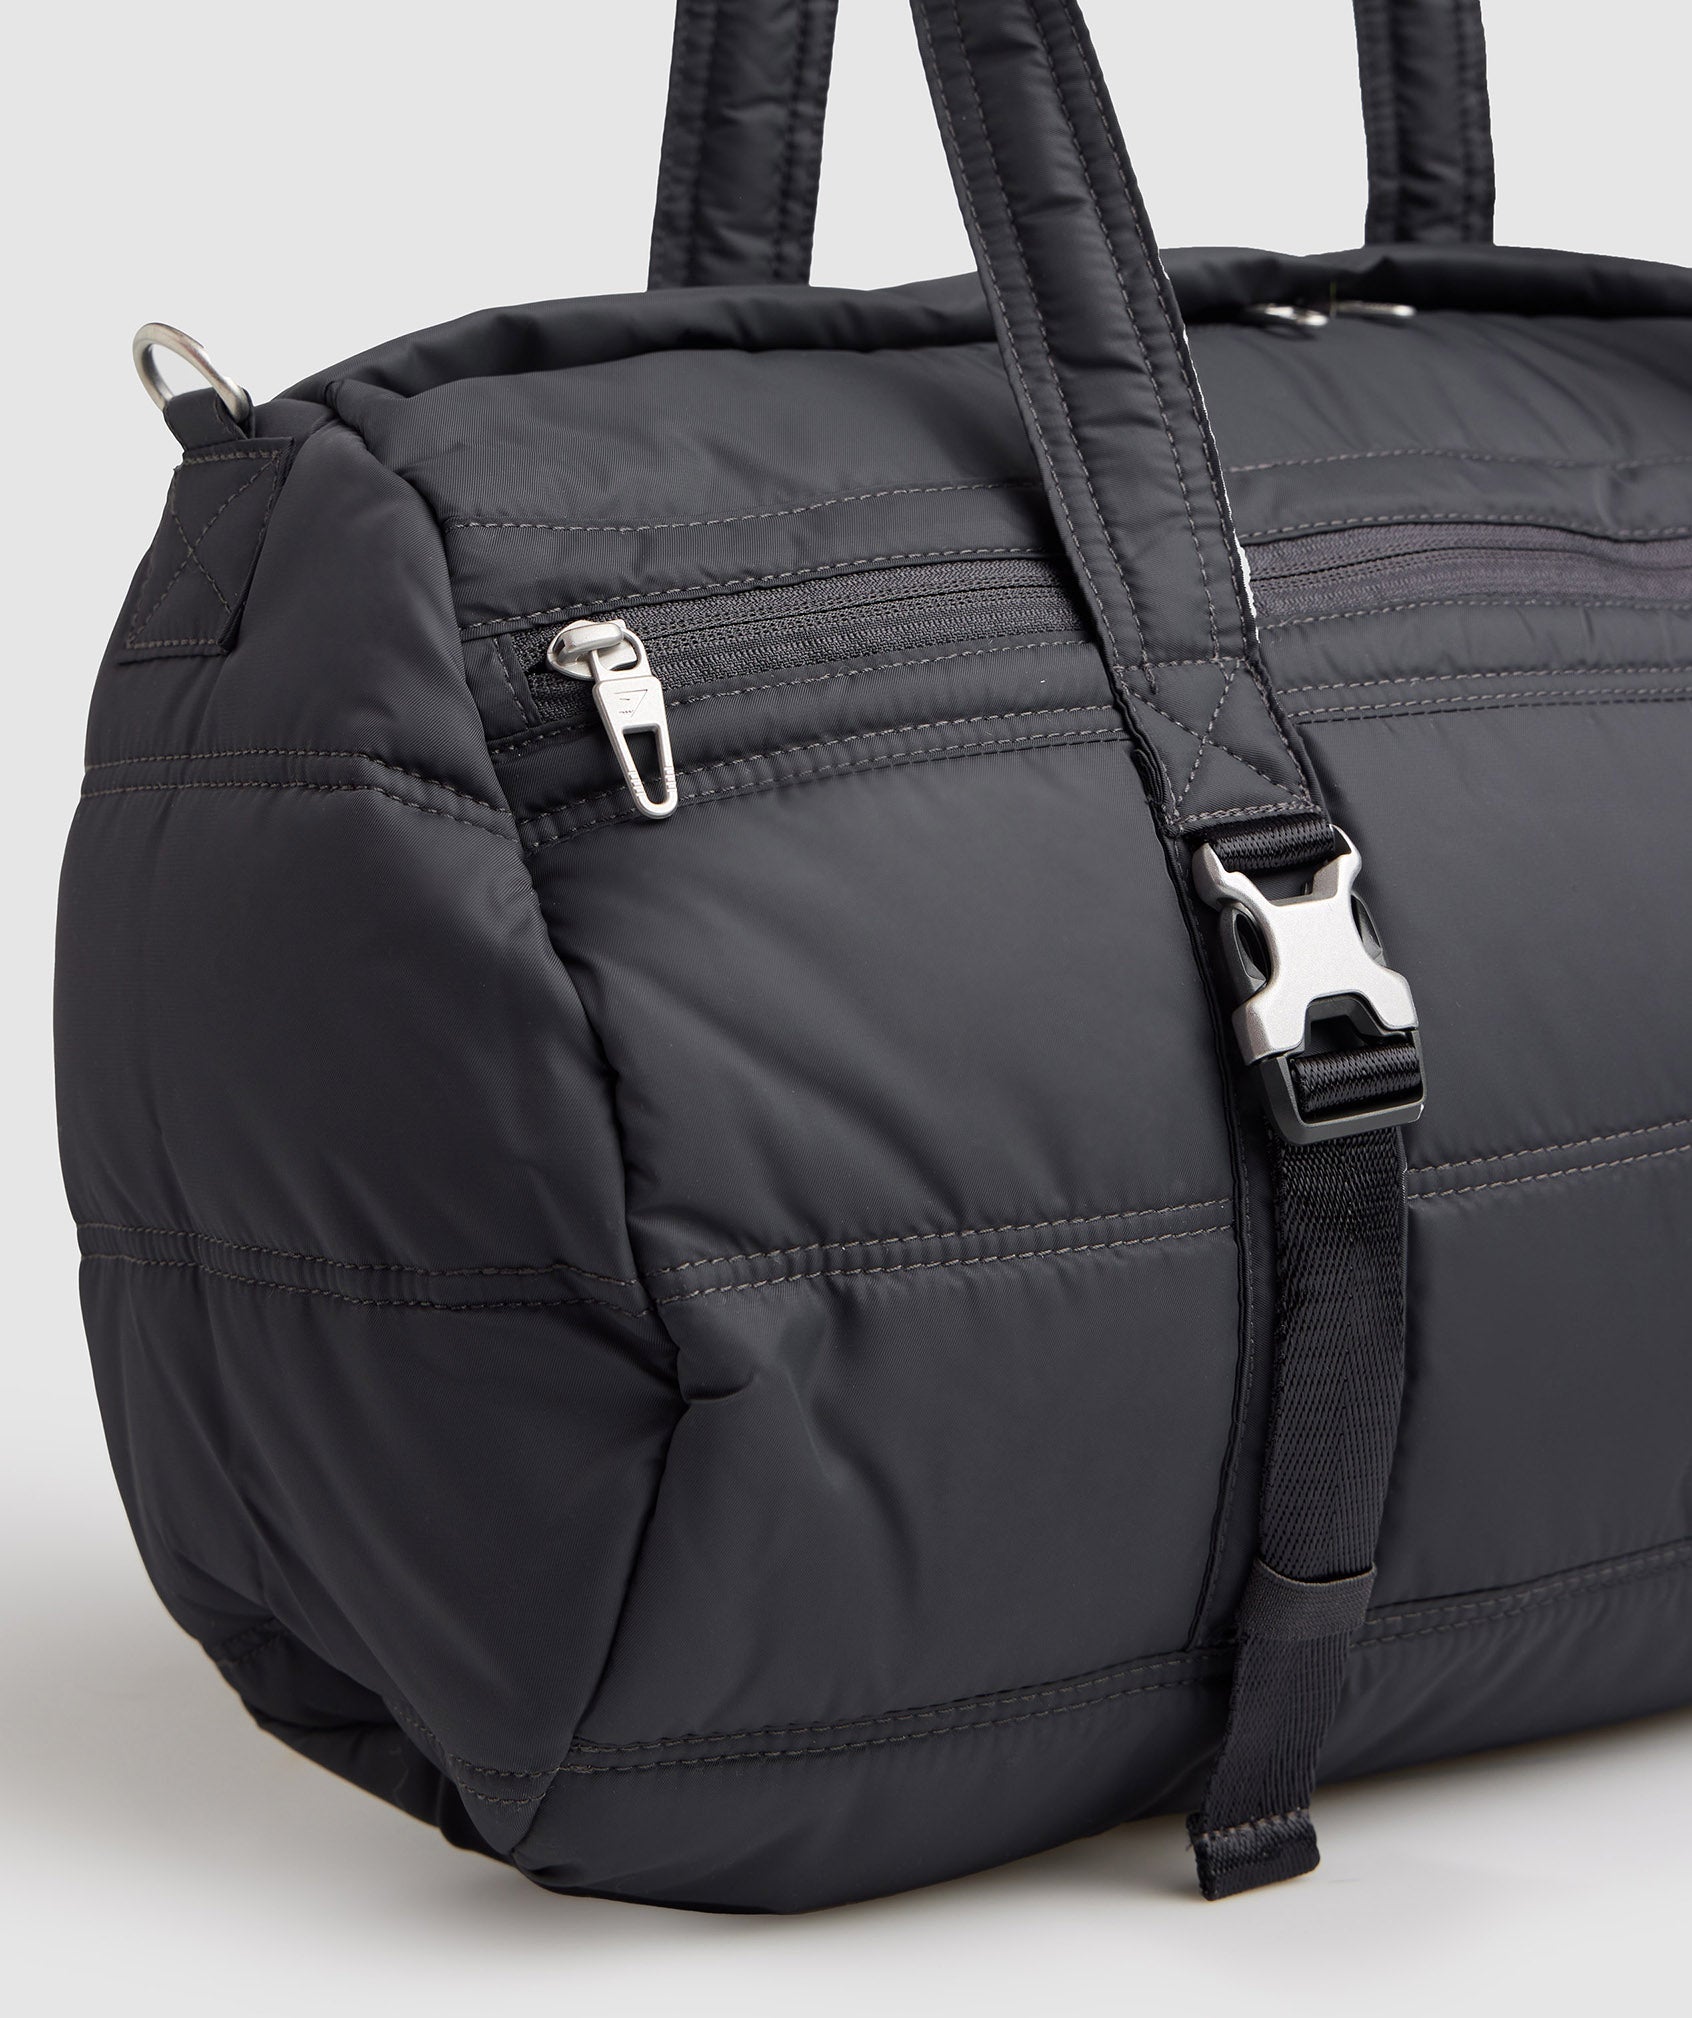 Premium Lifestyle Barrel Bag in Onyx Grey - view 2